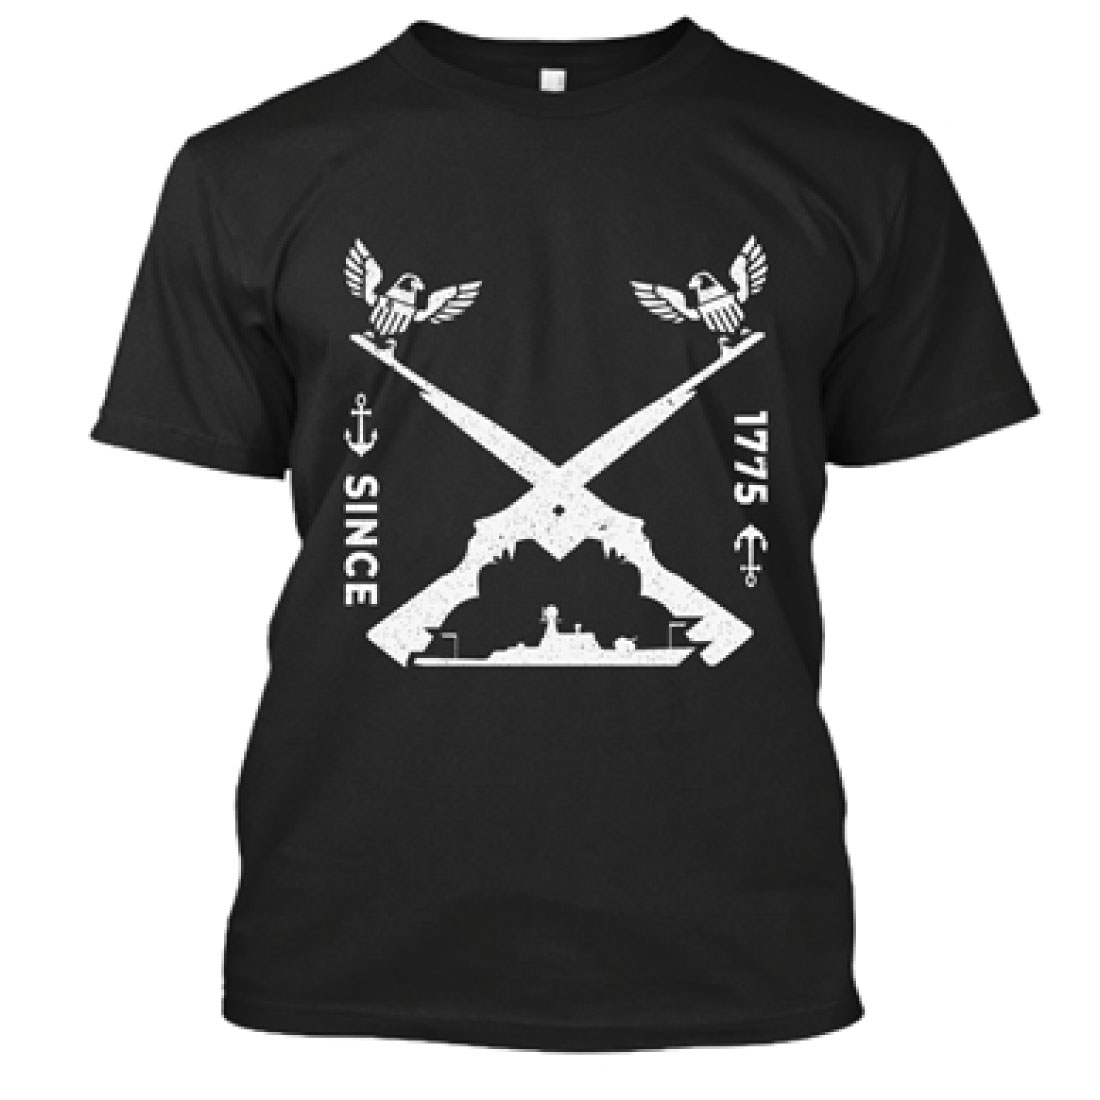 U.S Navy T-Shirt Design cover image.